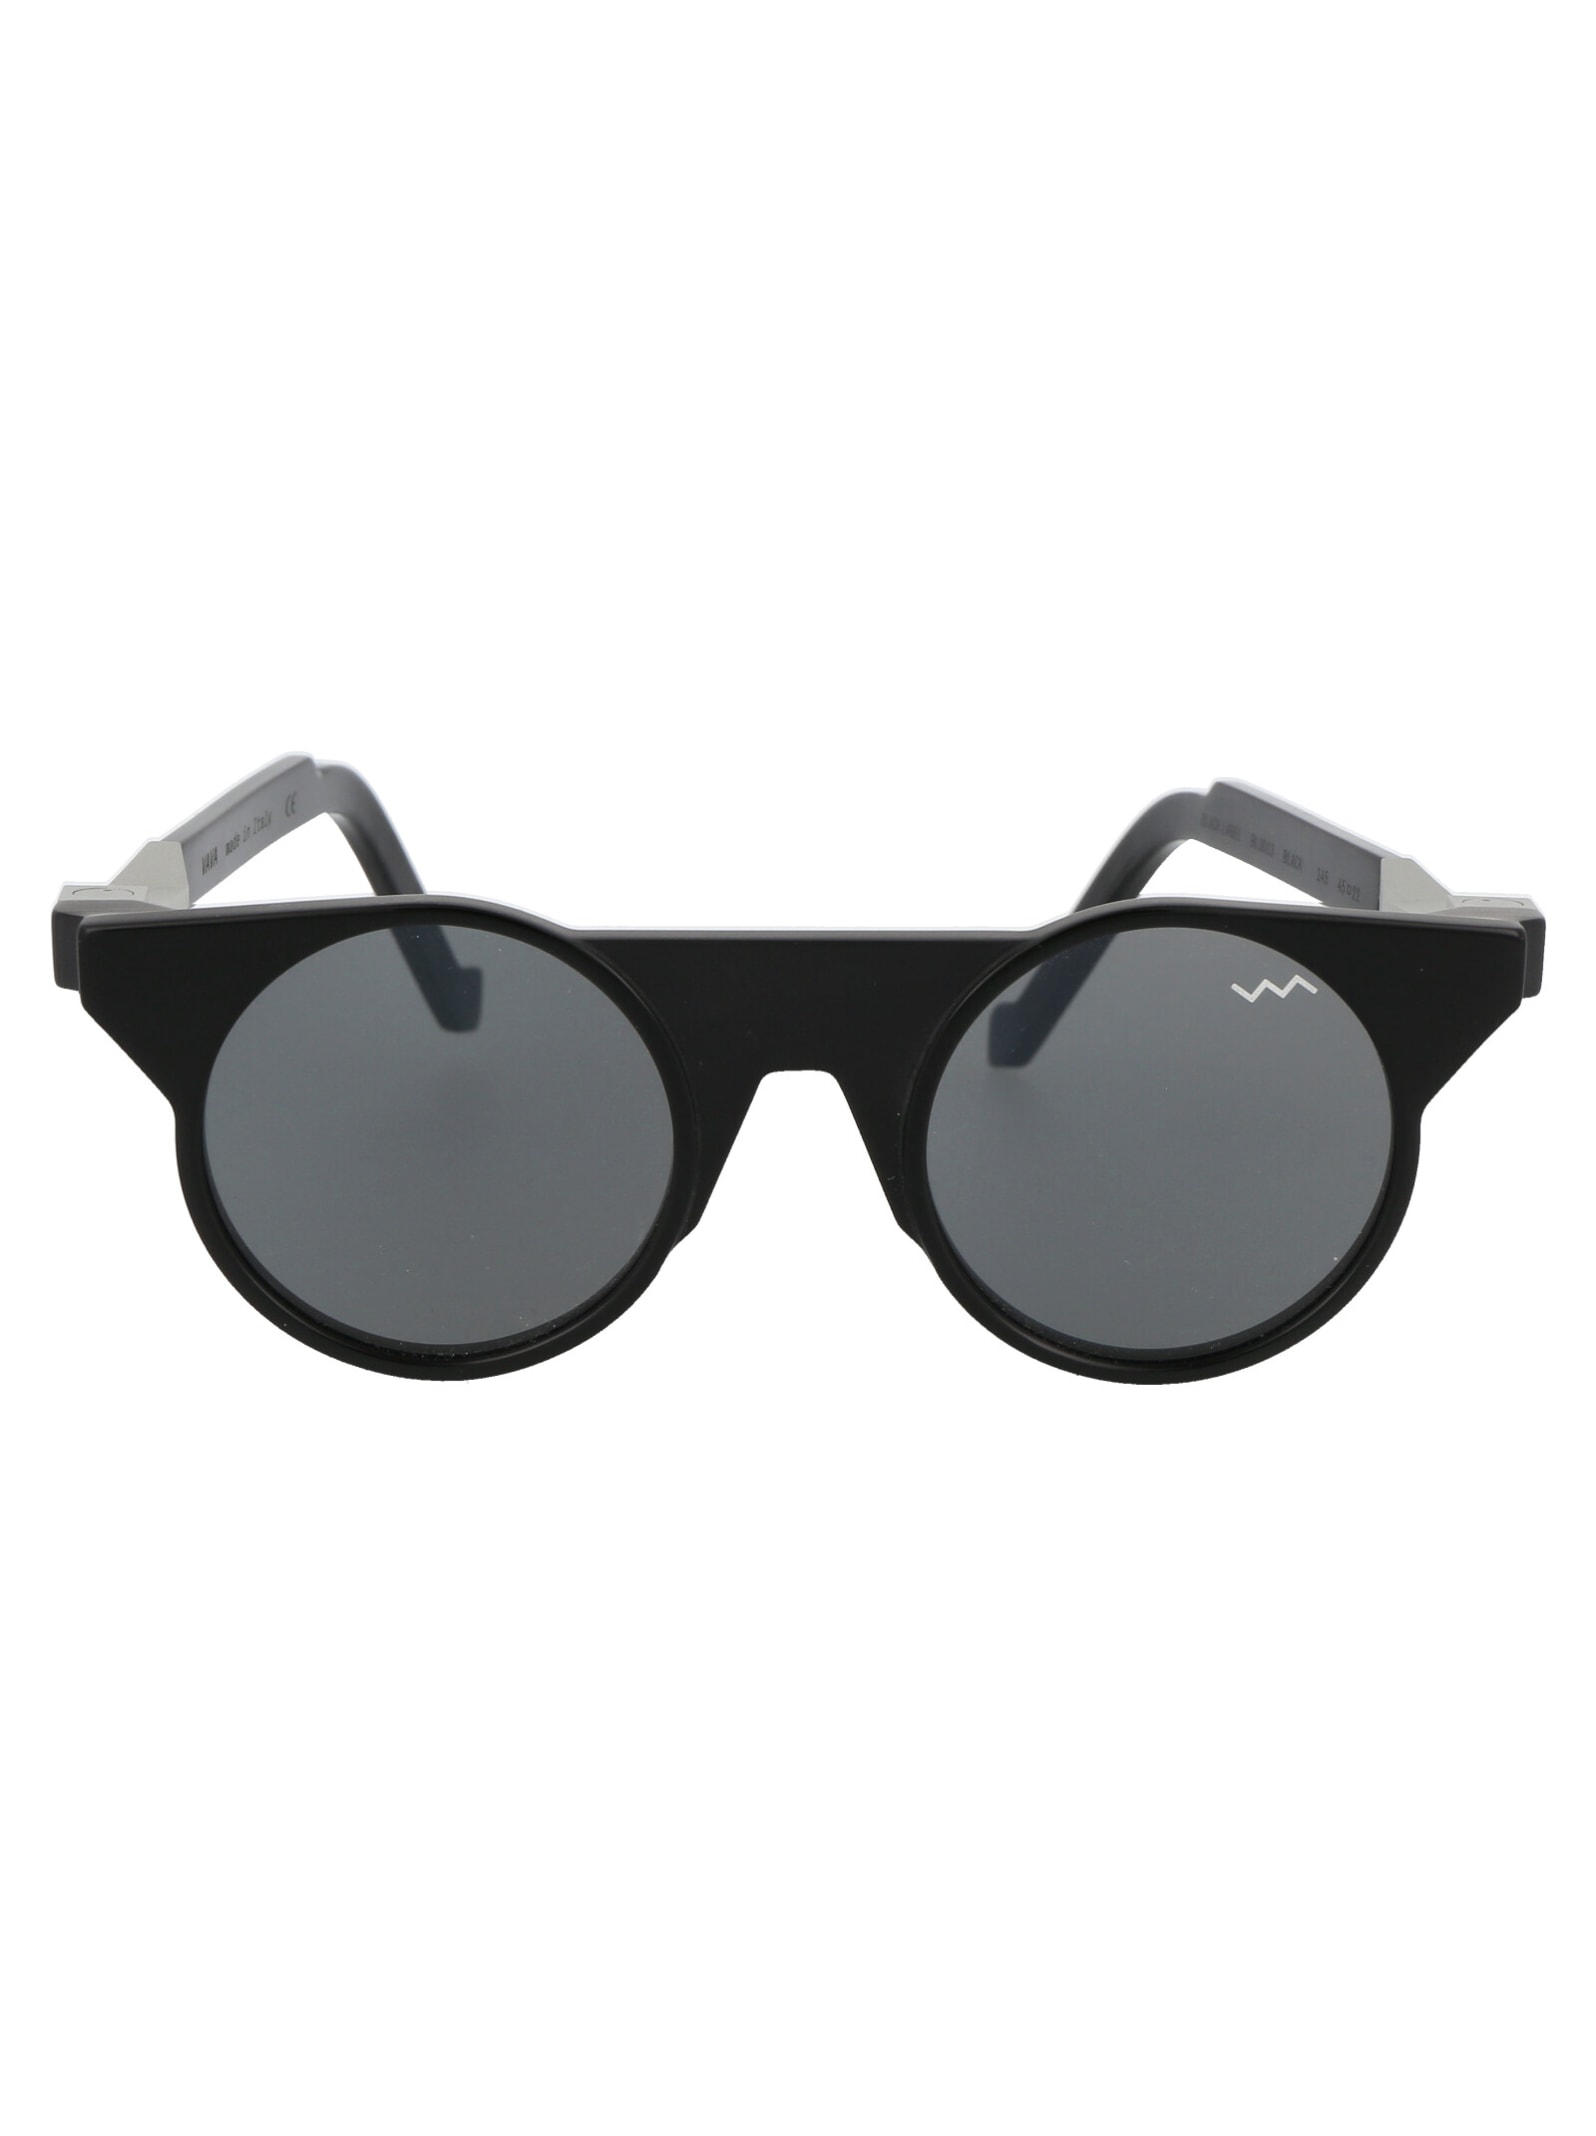 Shop Vava Bl0013 Sunglasses In Black Silver Lex Hinges Black Lenses Euro